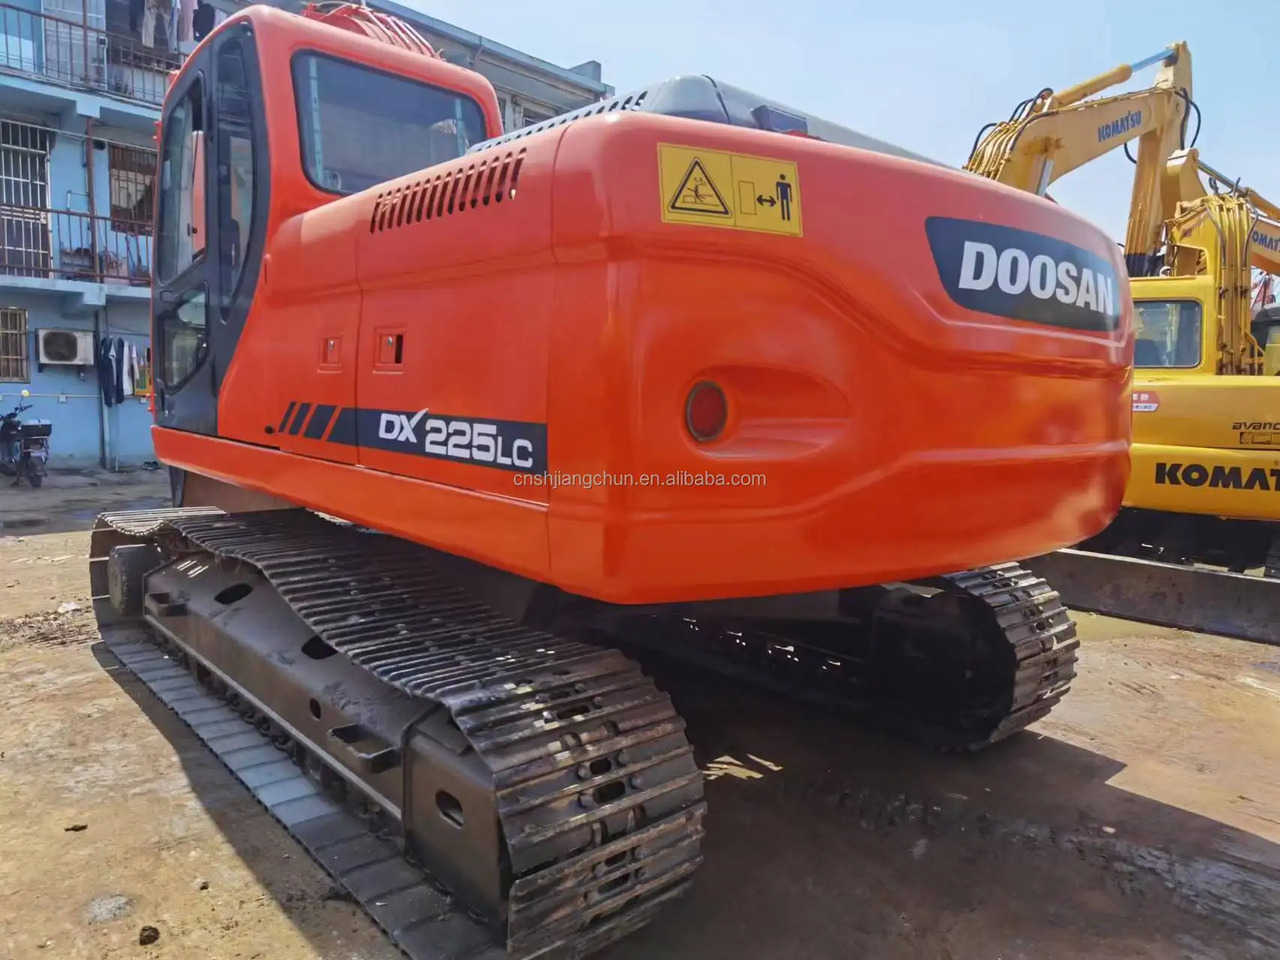 Kettenbagger second hand excavator used machinery equipment Doosan dx225 used excavators in stock for sale: das Bild 4